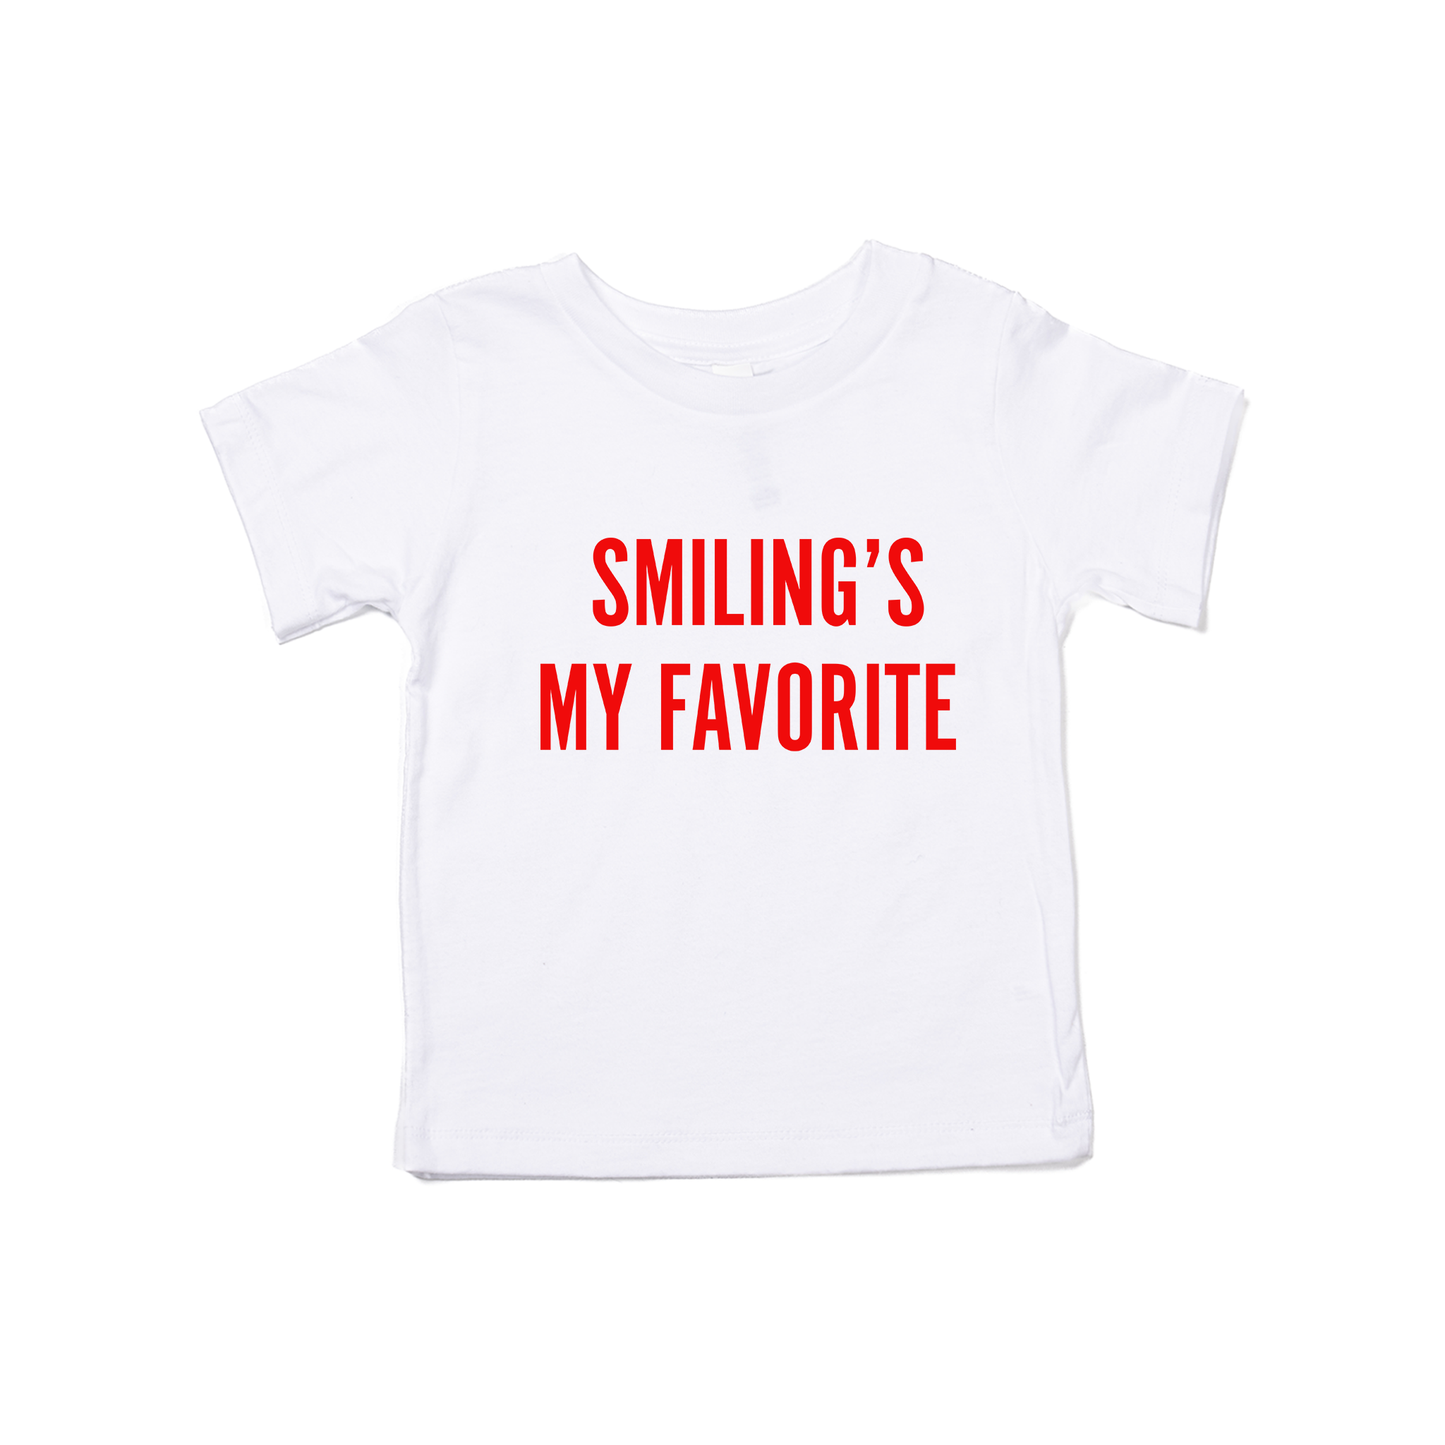 Smiling's My Favorite (Red) - Kids Tee (White)